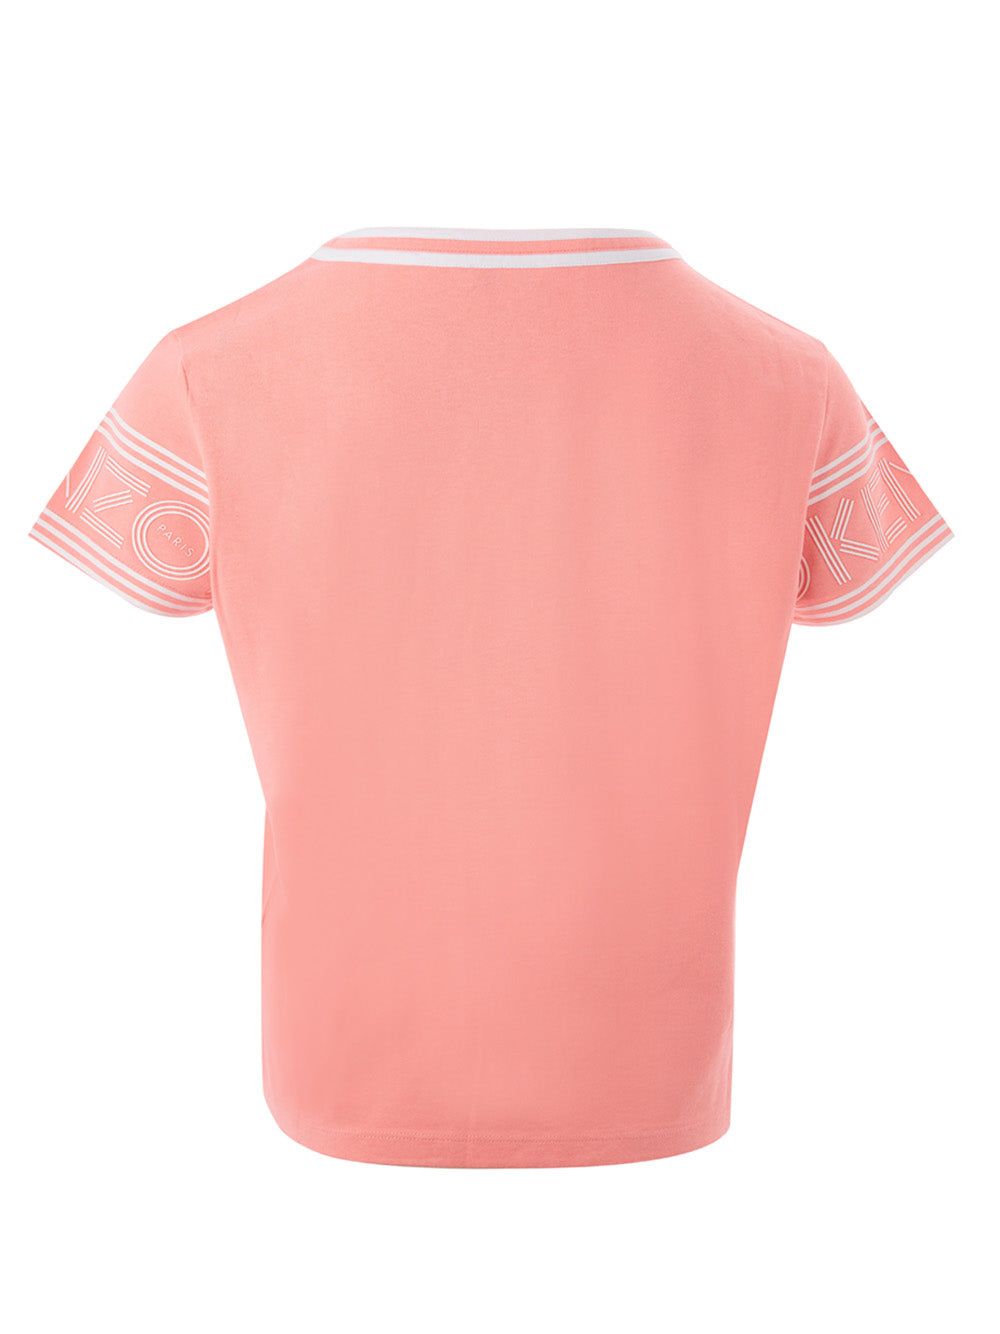 Fashionsarah.com Fashionsarah.com Kenzo Pink Cotton T-Shirt With Contrasting Logo